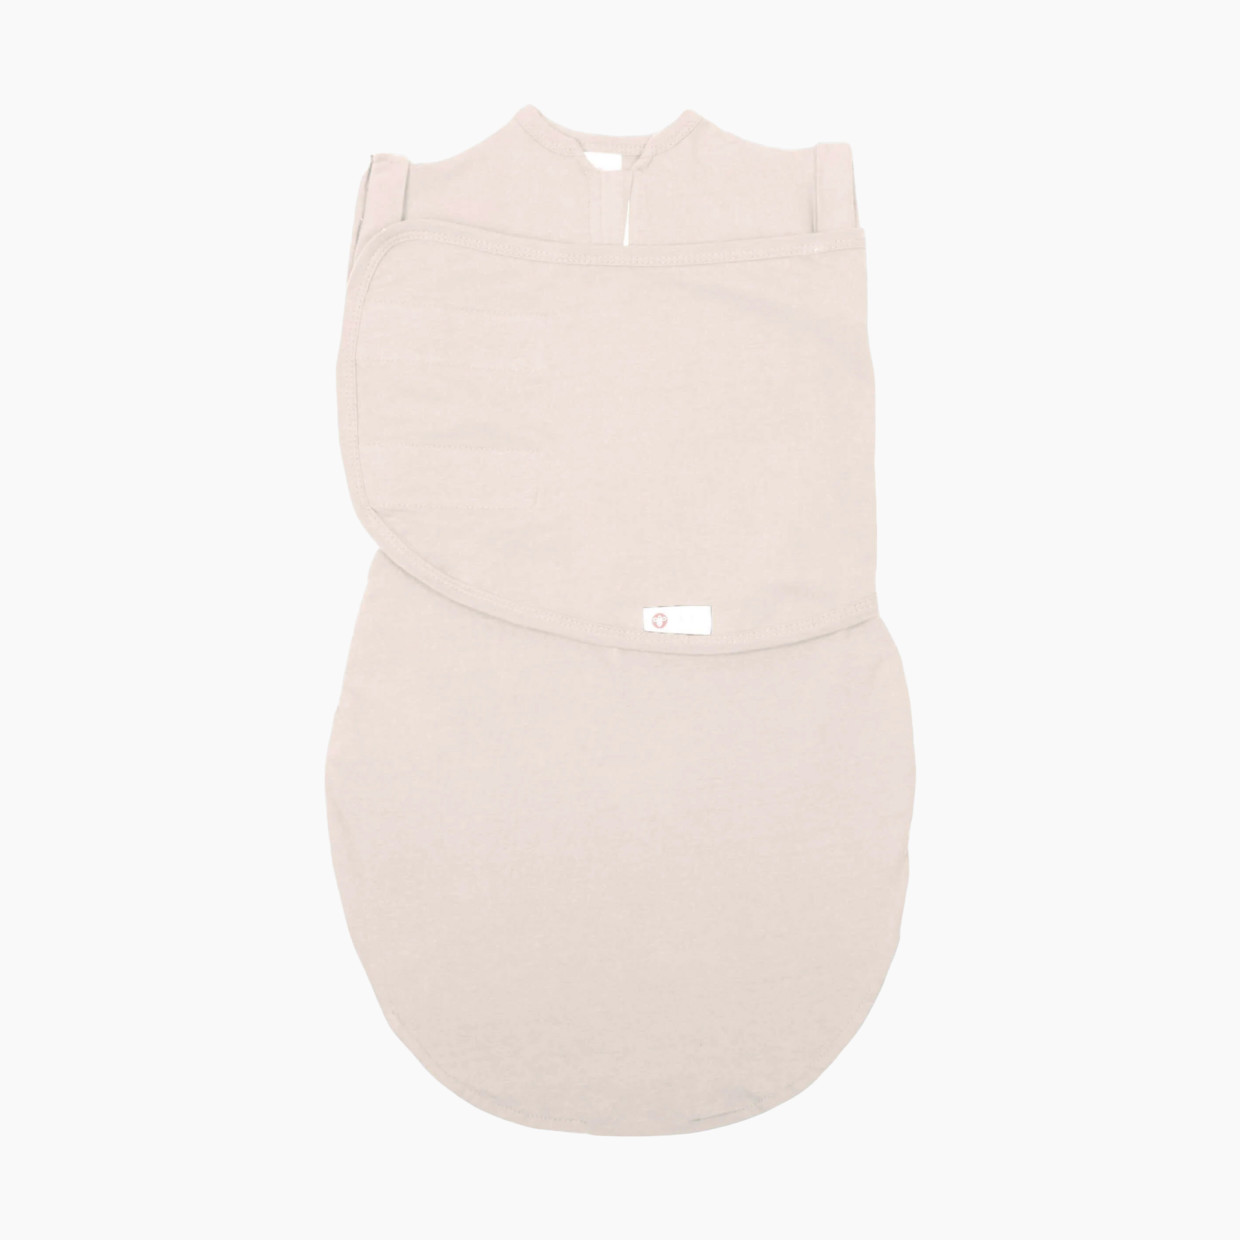 Embe Babies Short Sleeve Swaddle Sack - Cream, Medium/Large 12-18 Lbs.